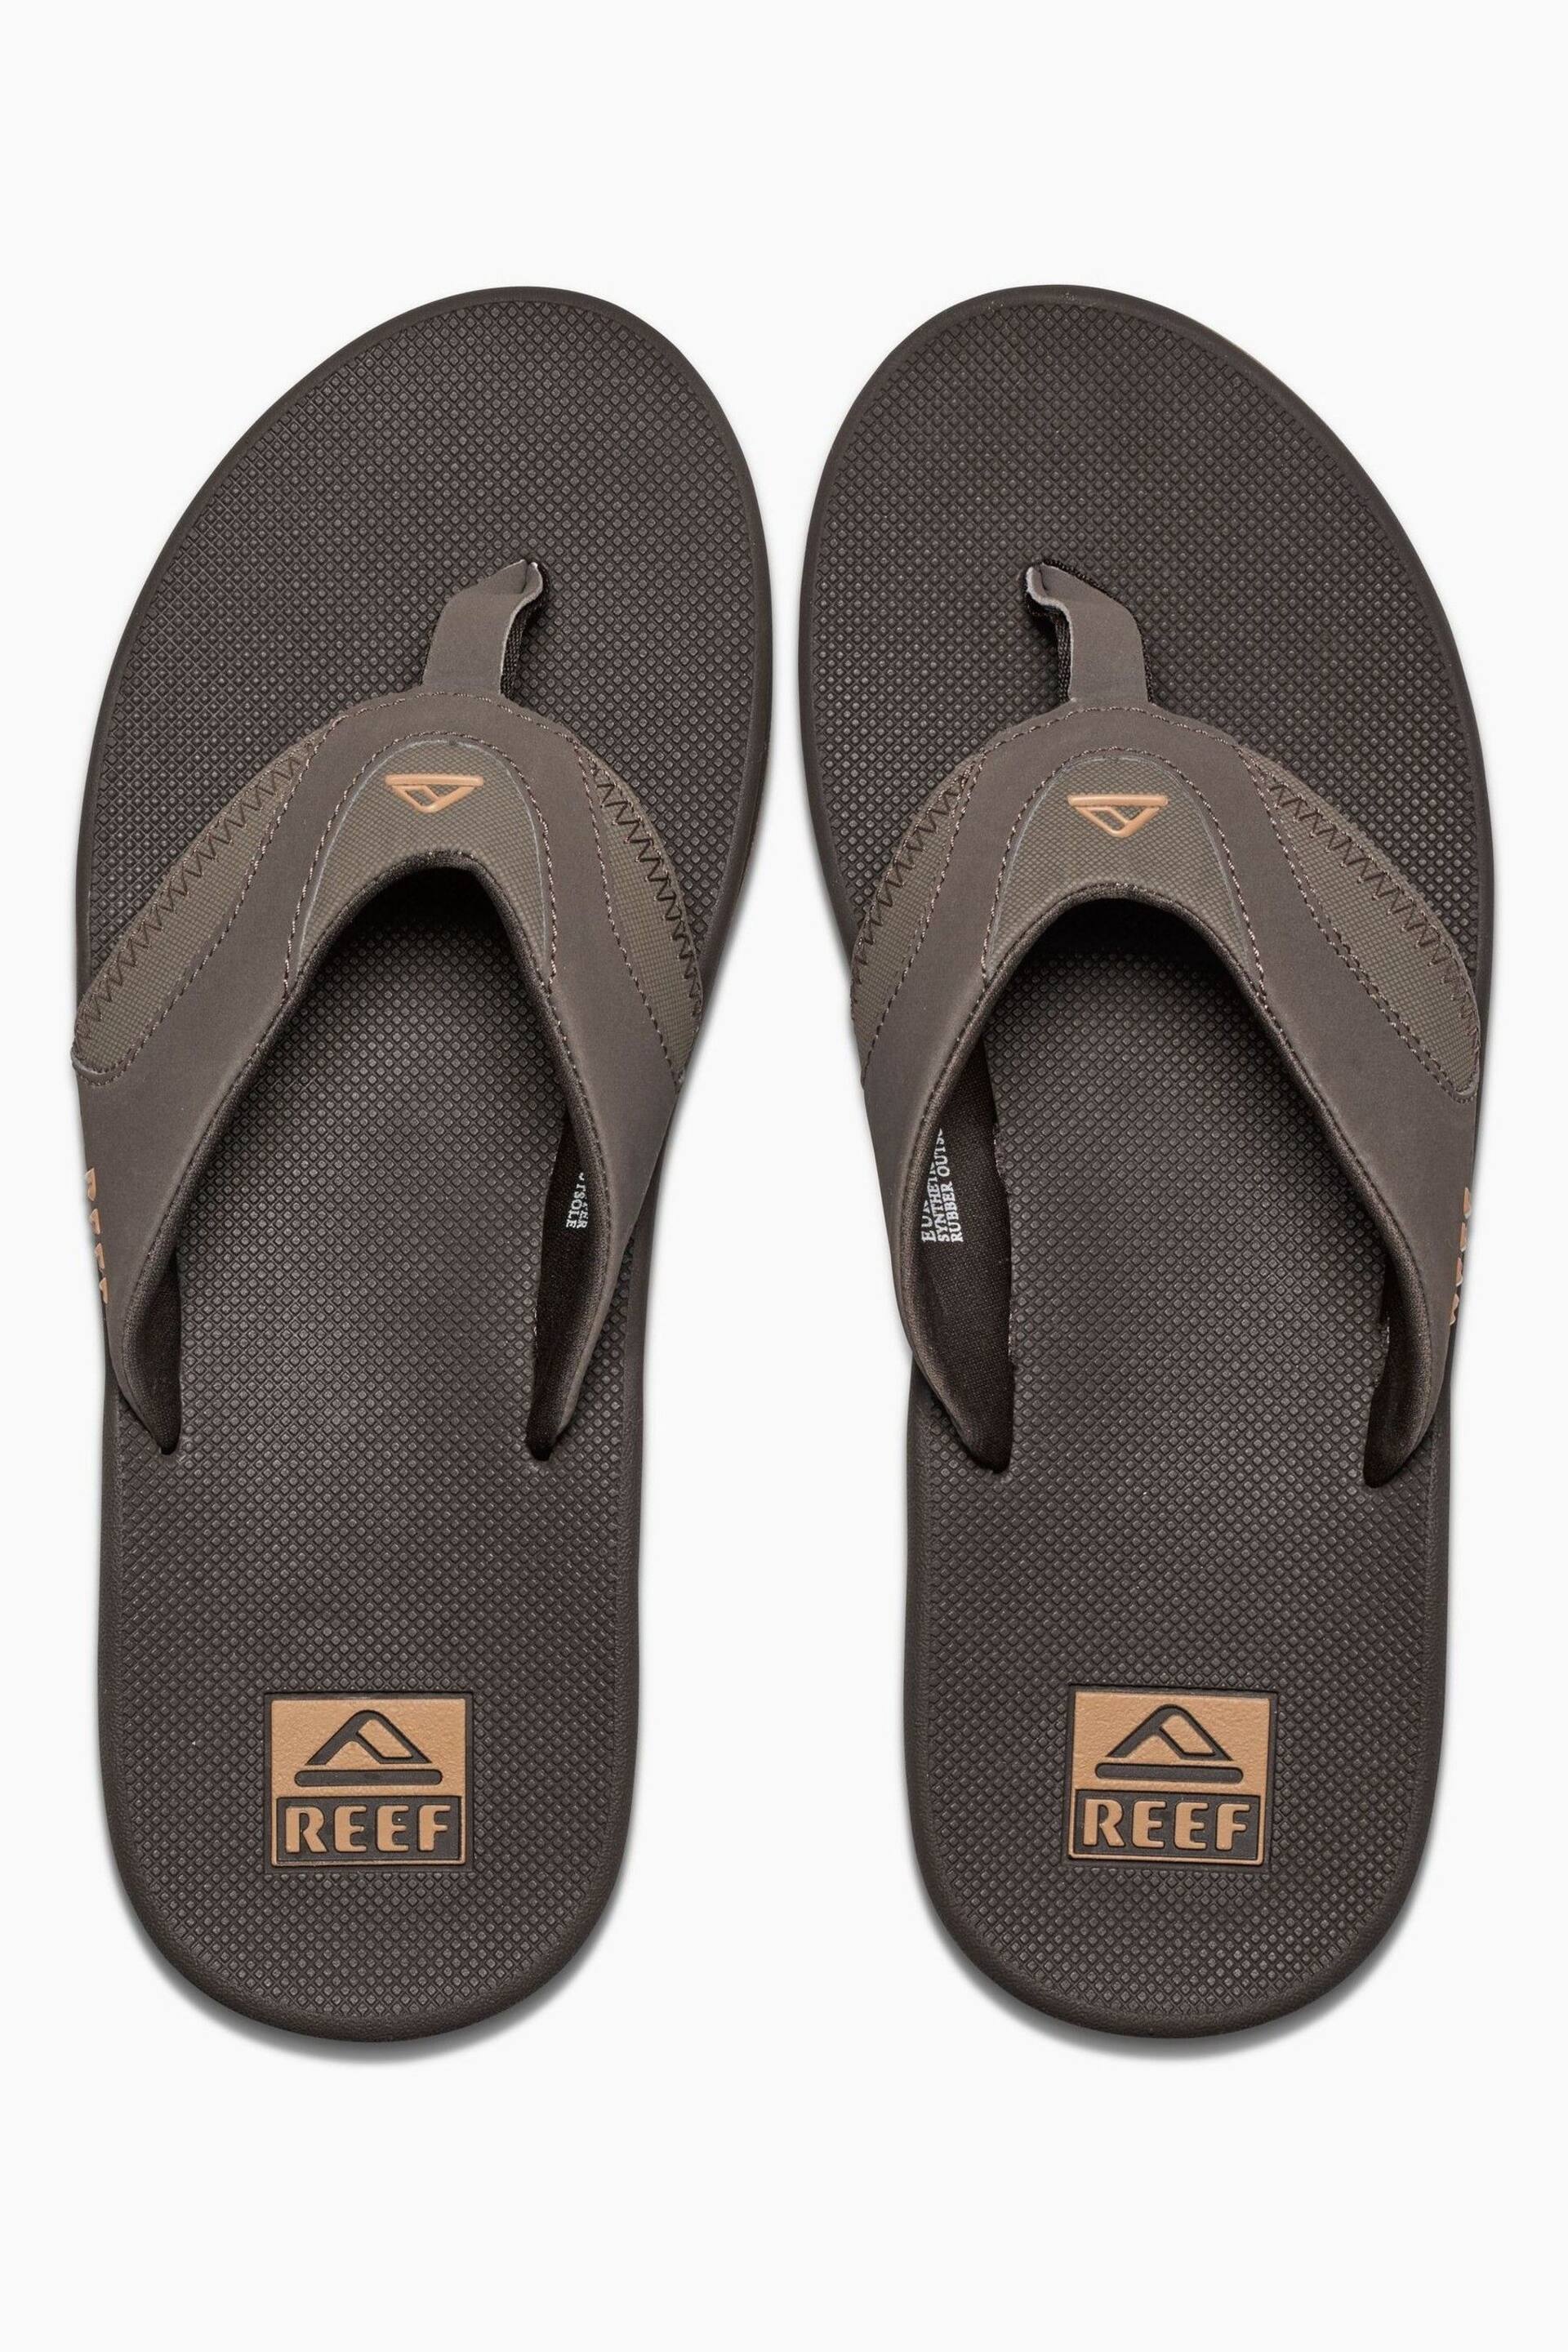 Reef Fanning Flip Flops - Image 2 of 4